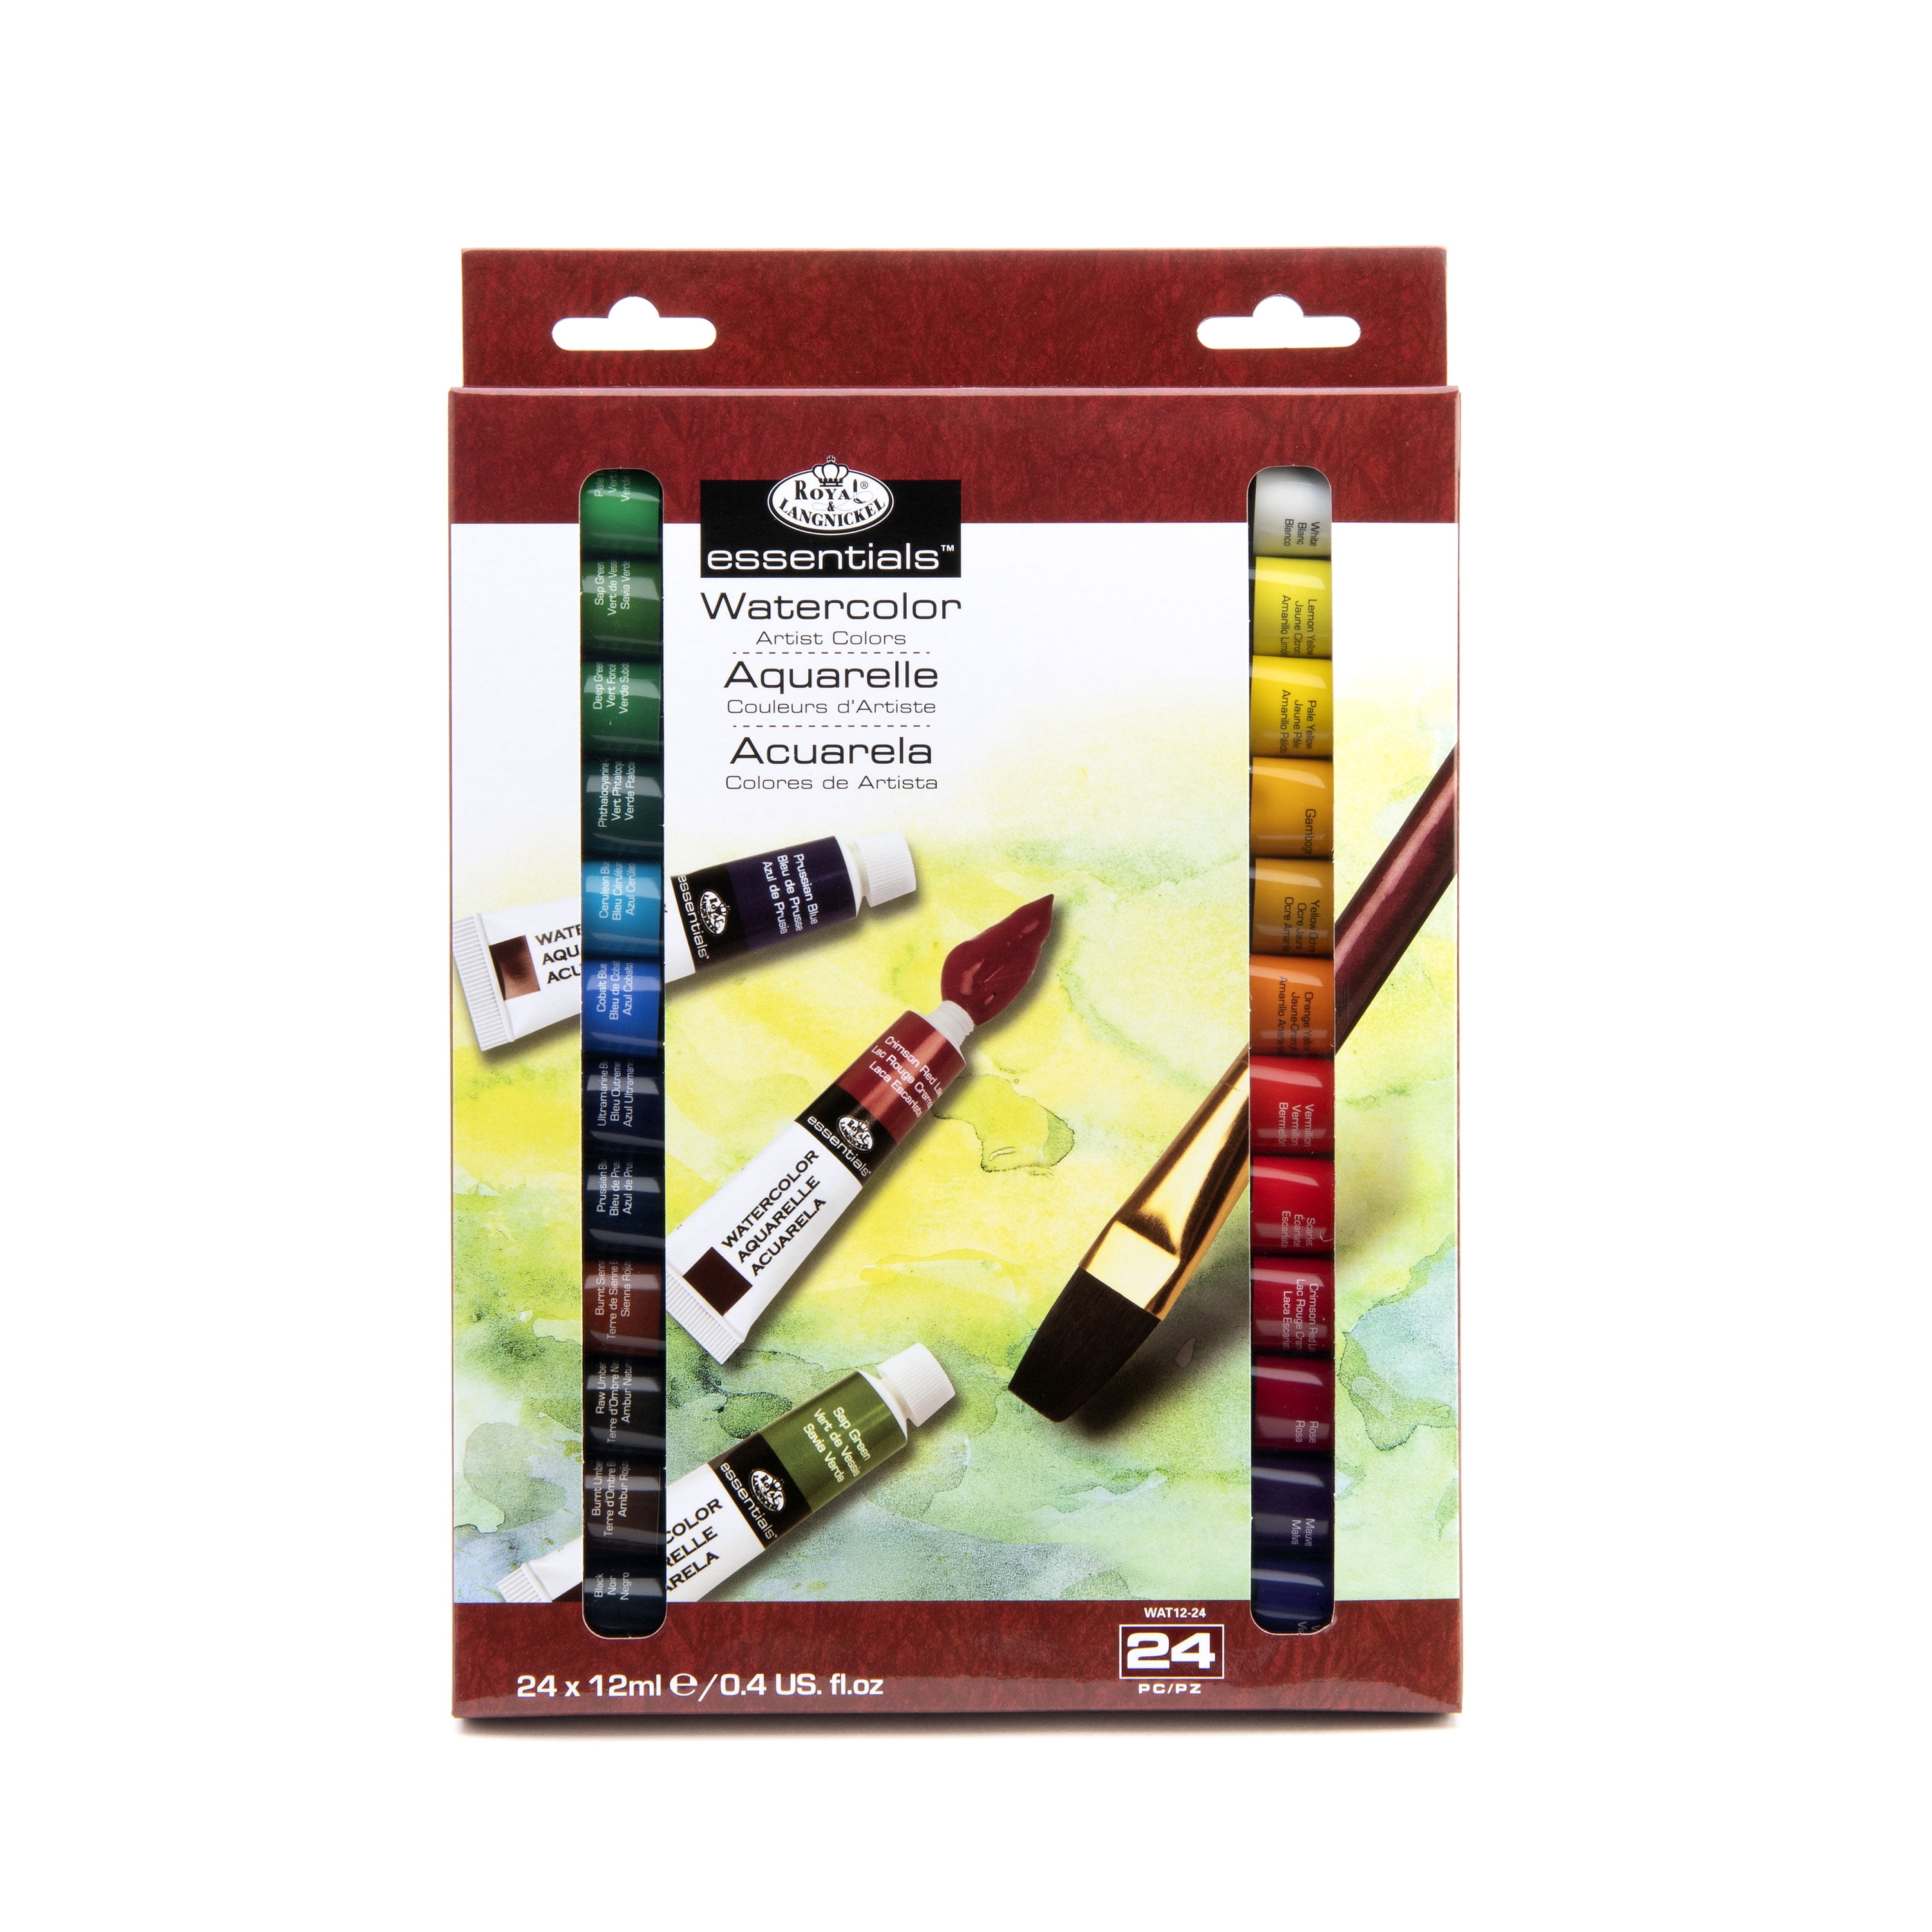 Royal & Langnickel Essentials Watercolor Paint Pack, 12Ml Tubes, 24 Colors - Walmart.com